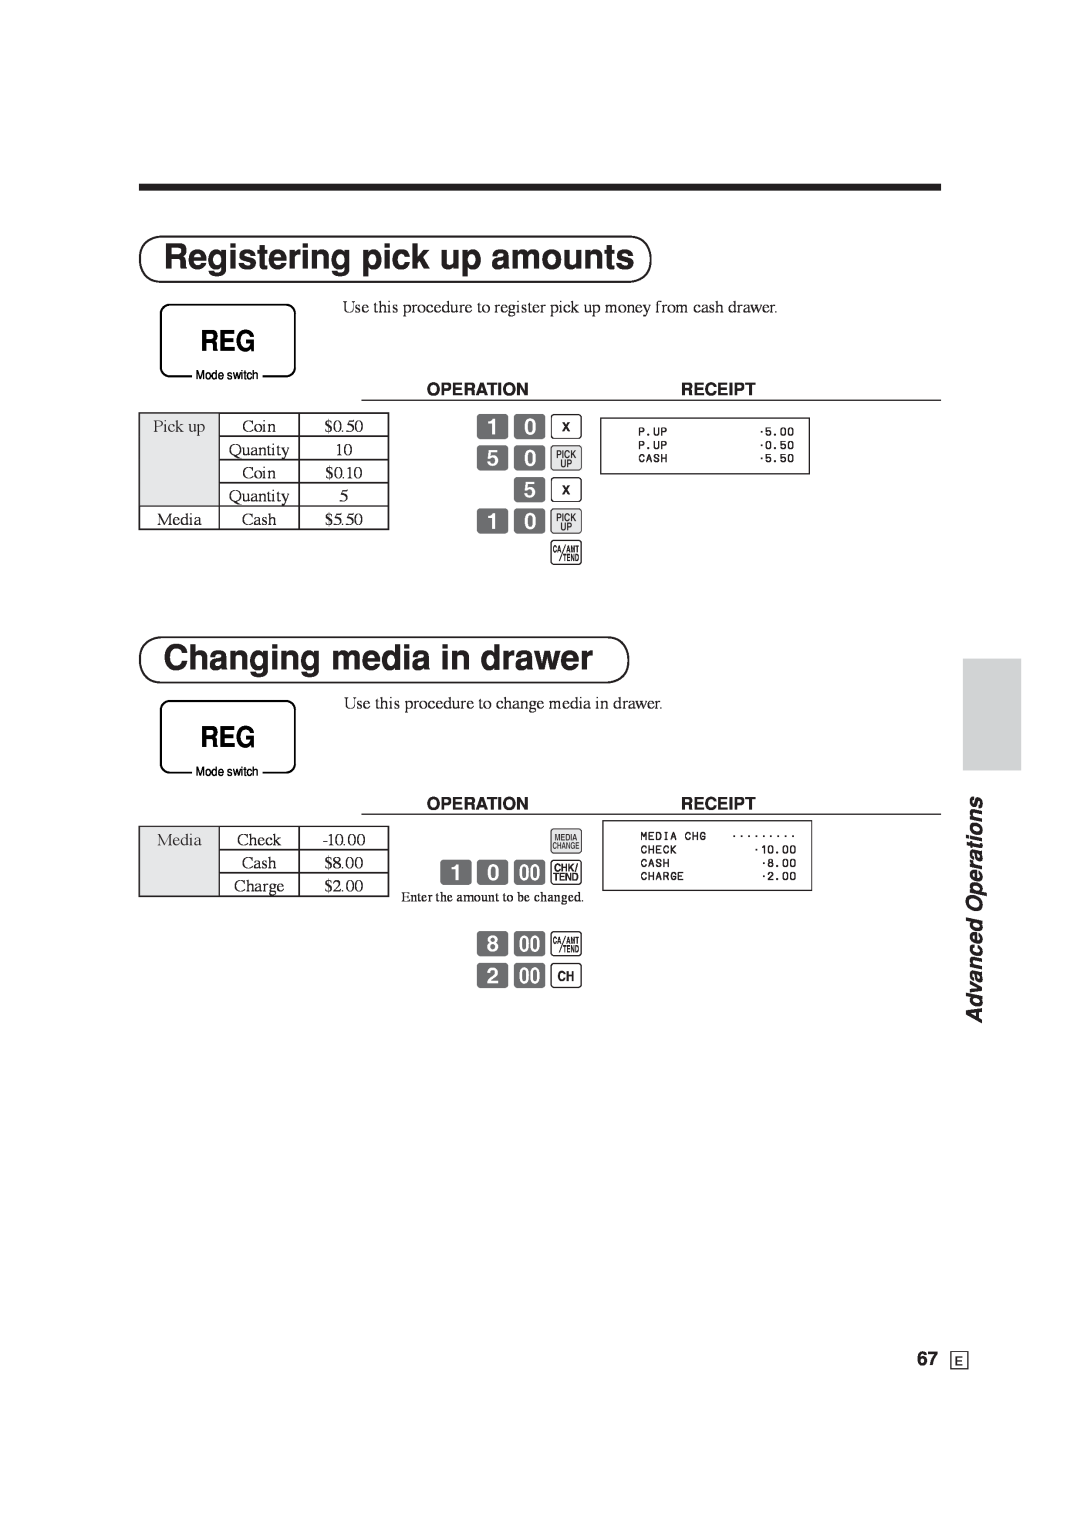 Casio SE-C6000, SE-S6000 user manual Registering pick up amounts, Changing media in drawer, 10L a, i 10-k, 8-a 2-h, 67 E 